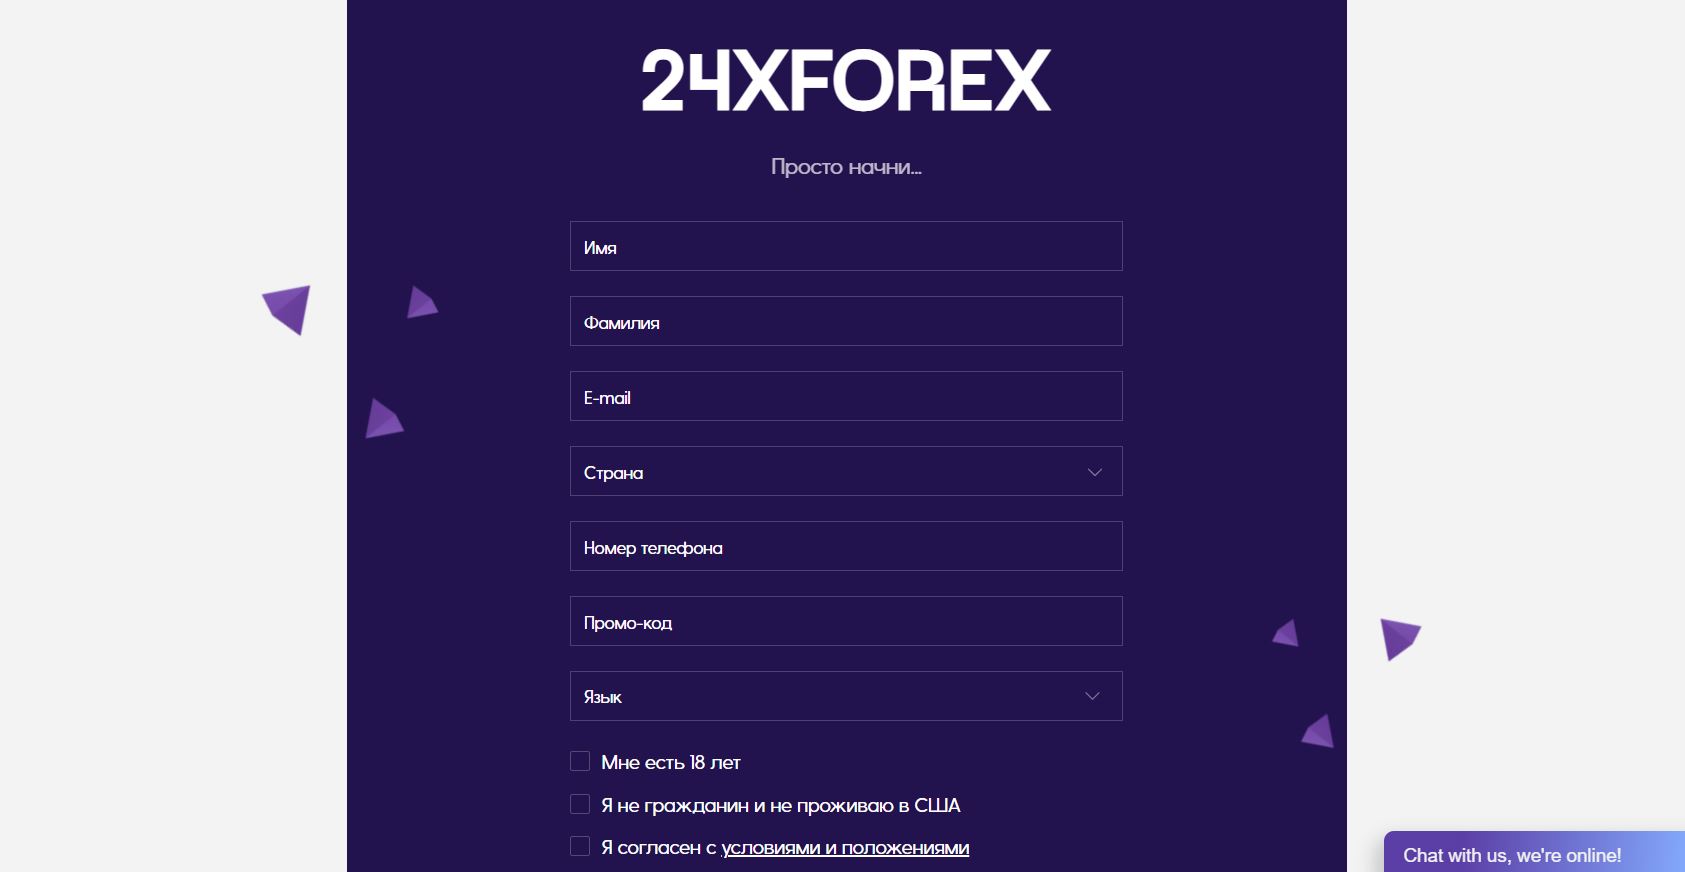 24x Forex